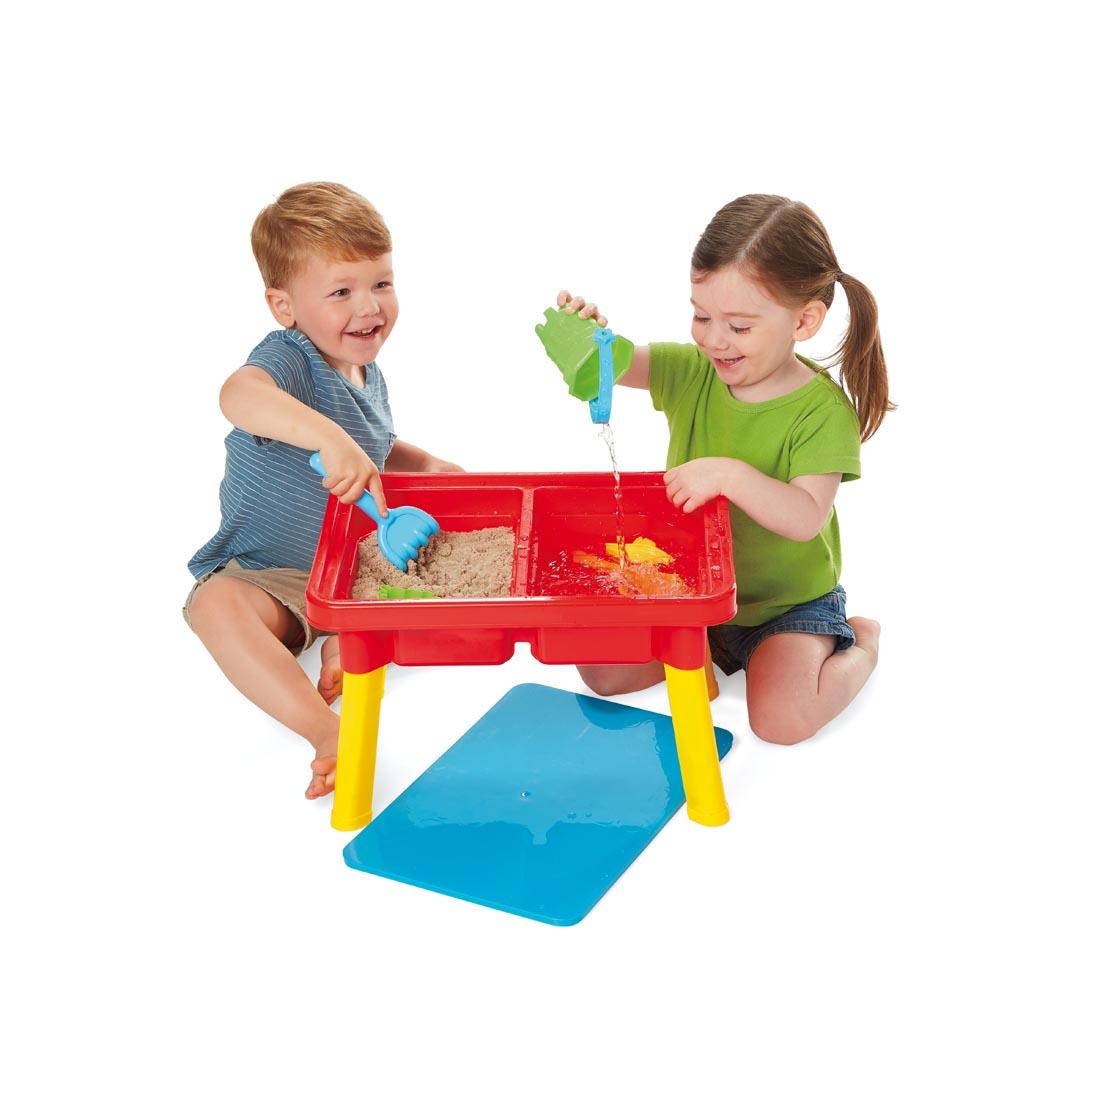 Two children enjoying the Kidoozie Sand 'n Splash Activity Table